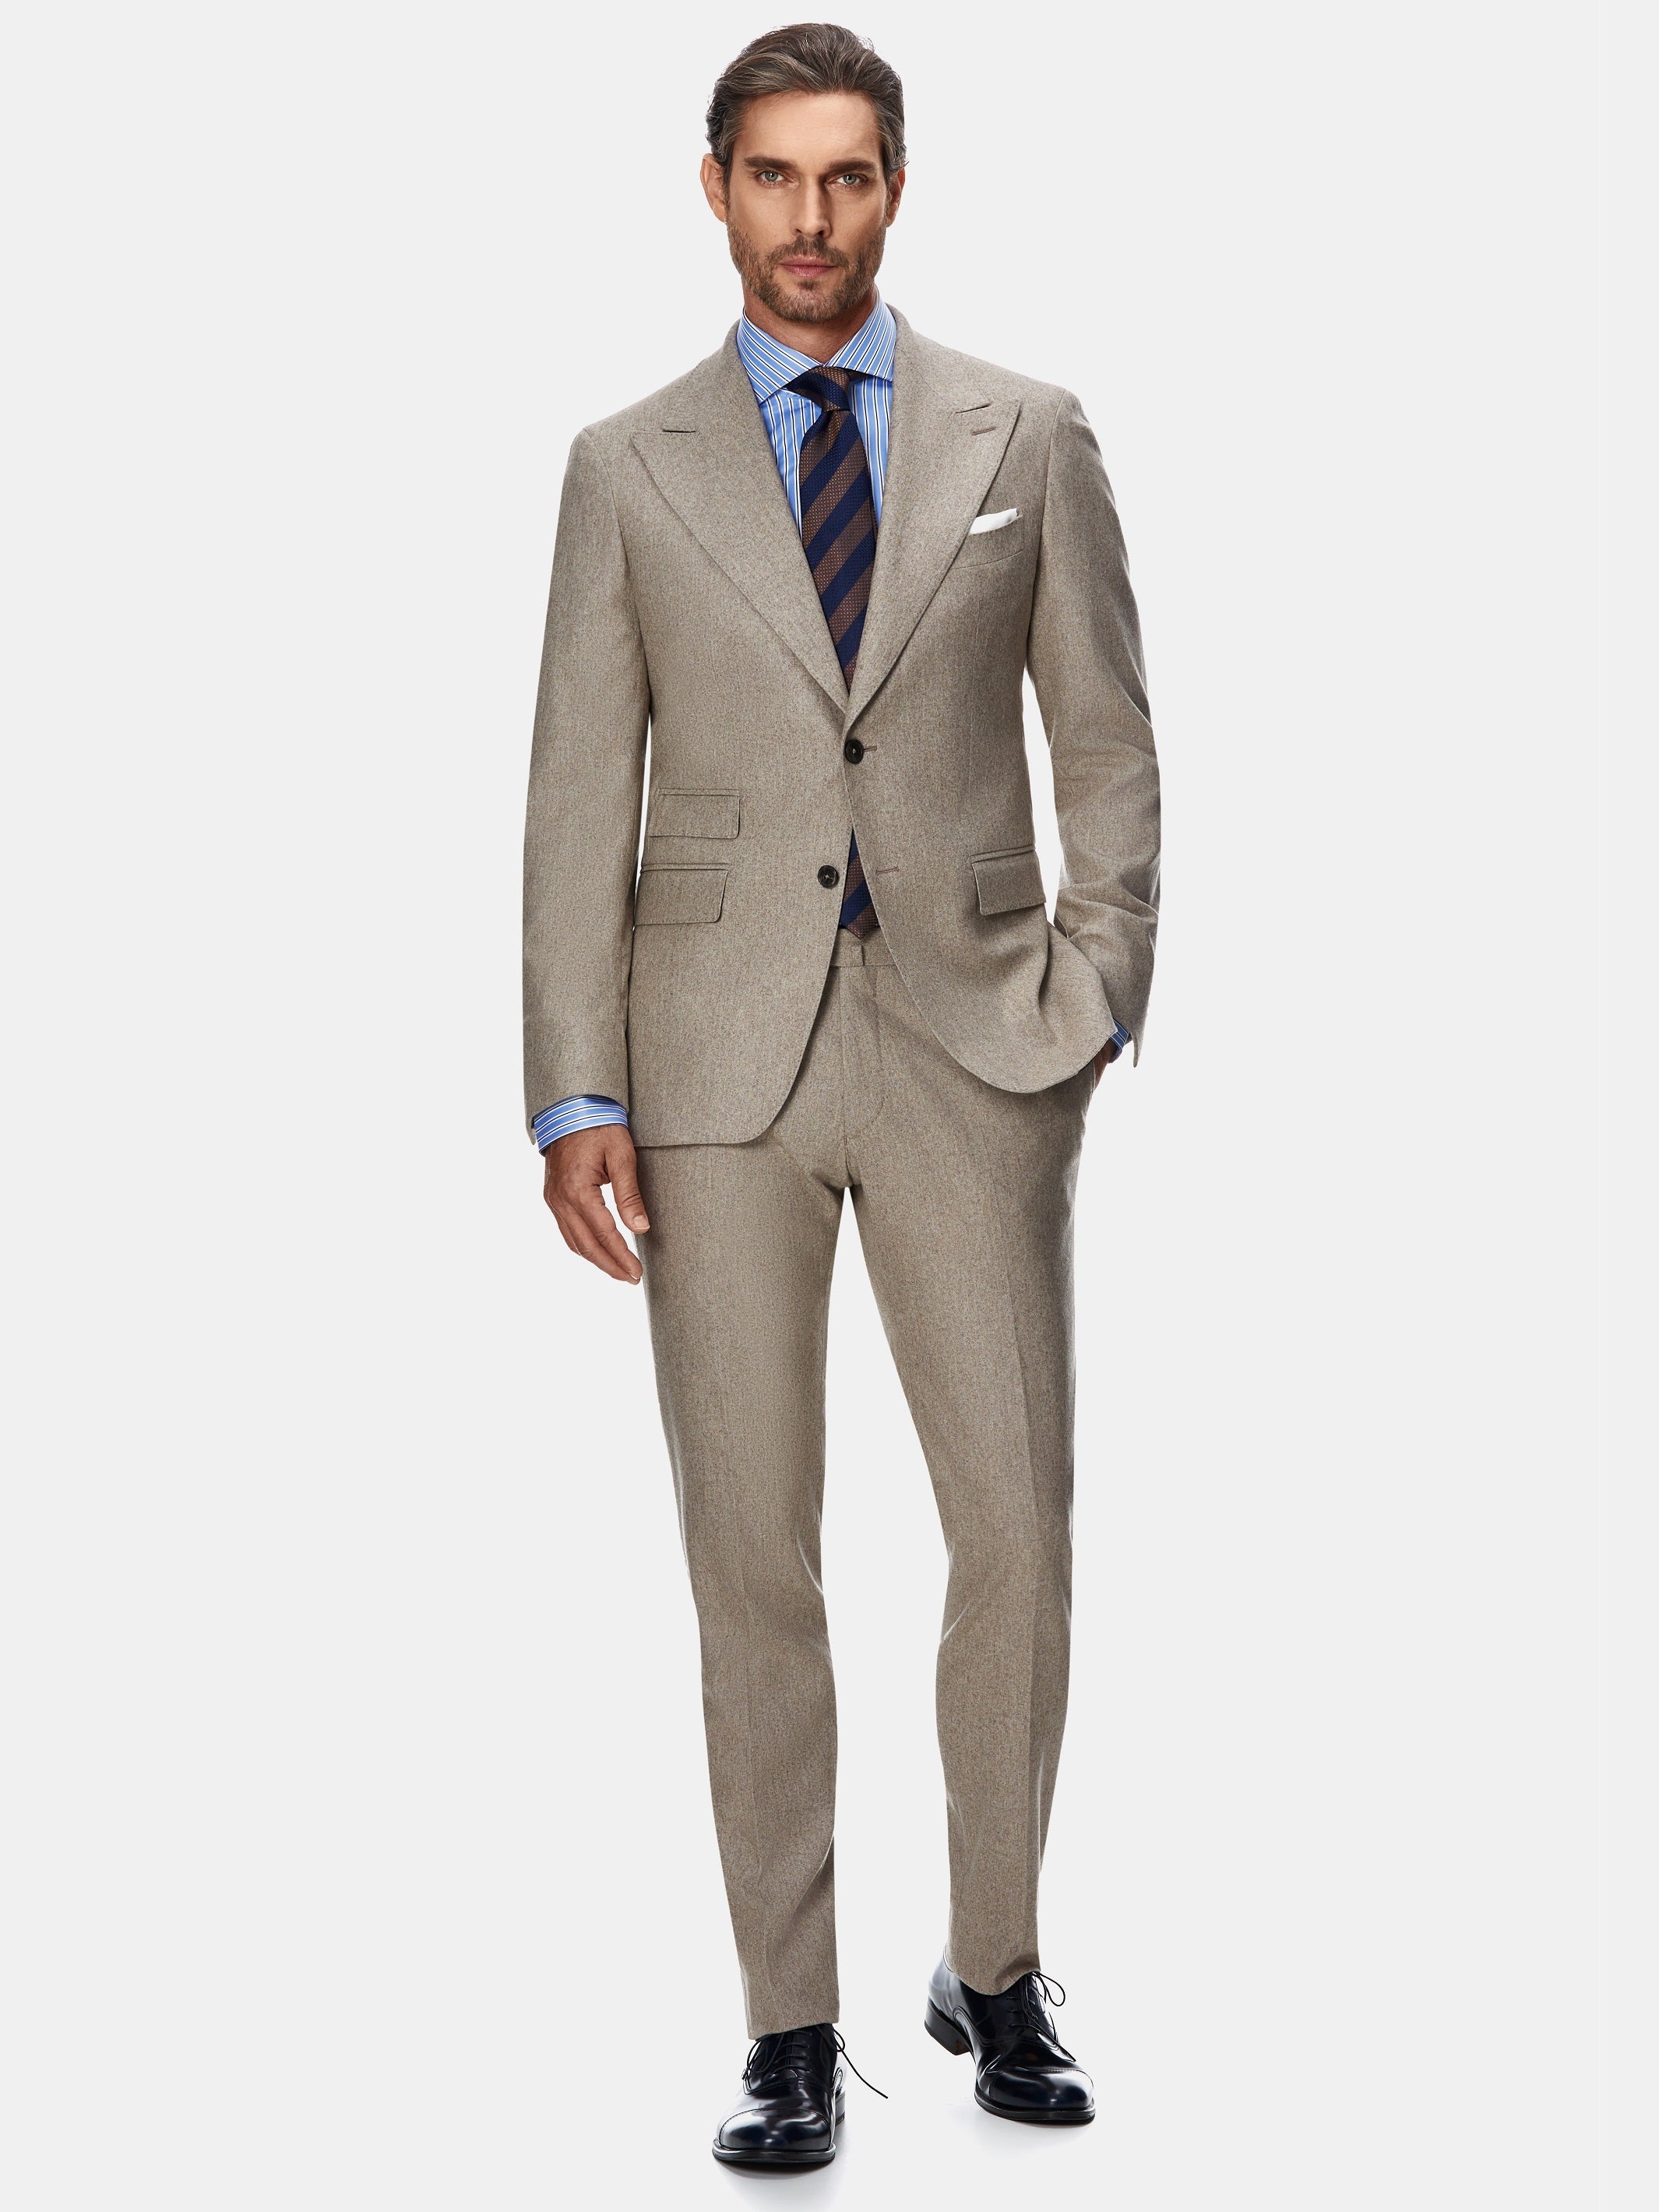 Two-piece suit in beige flannel, textured